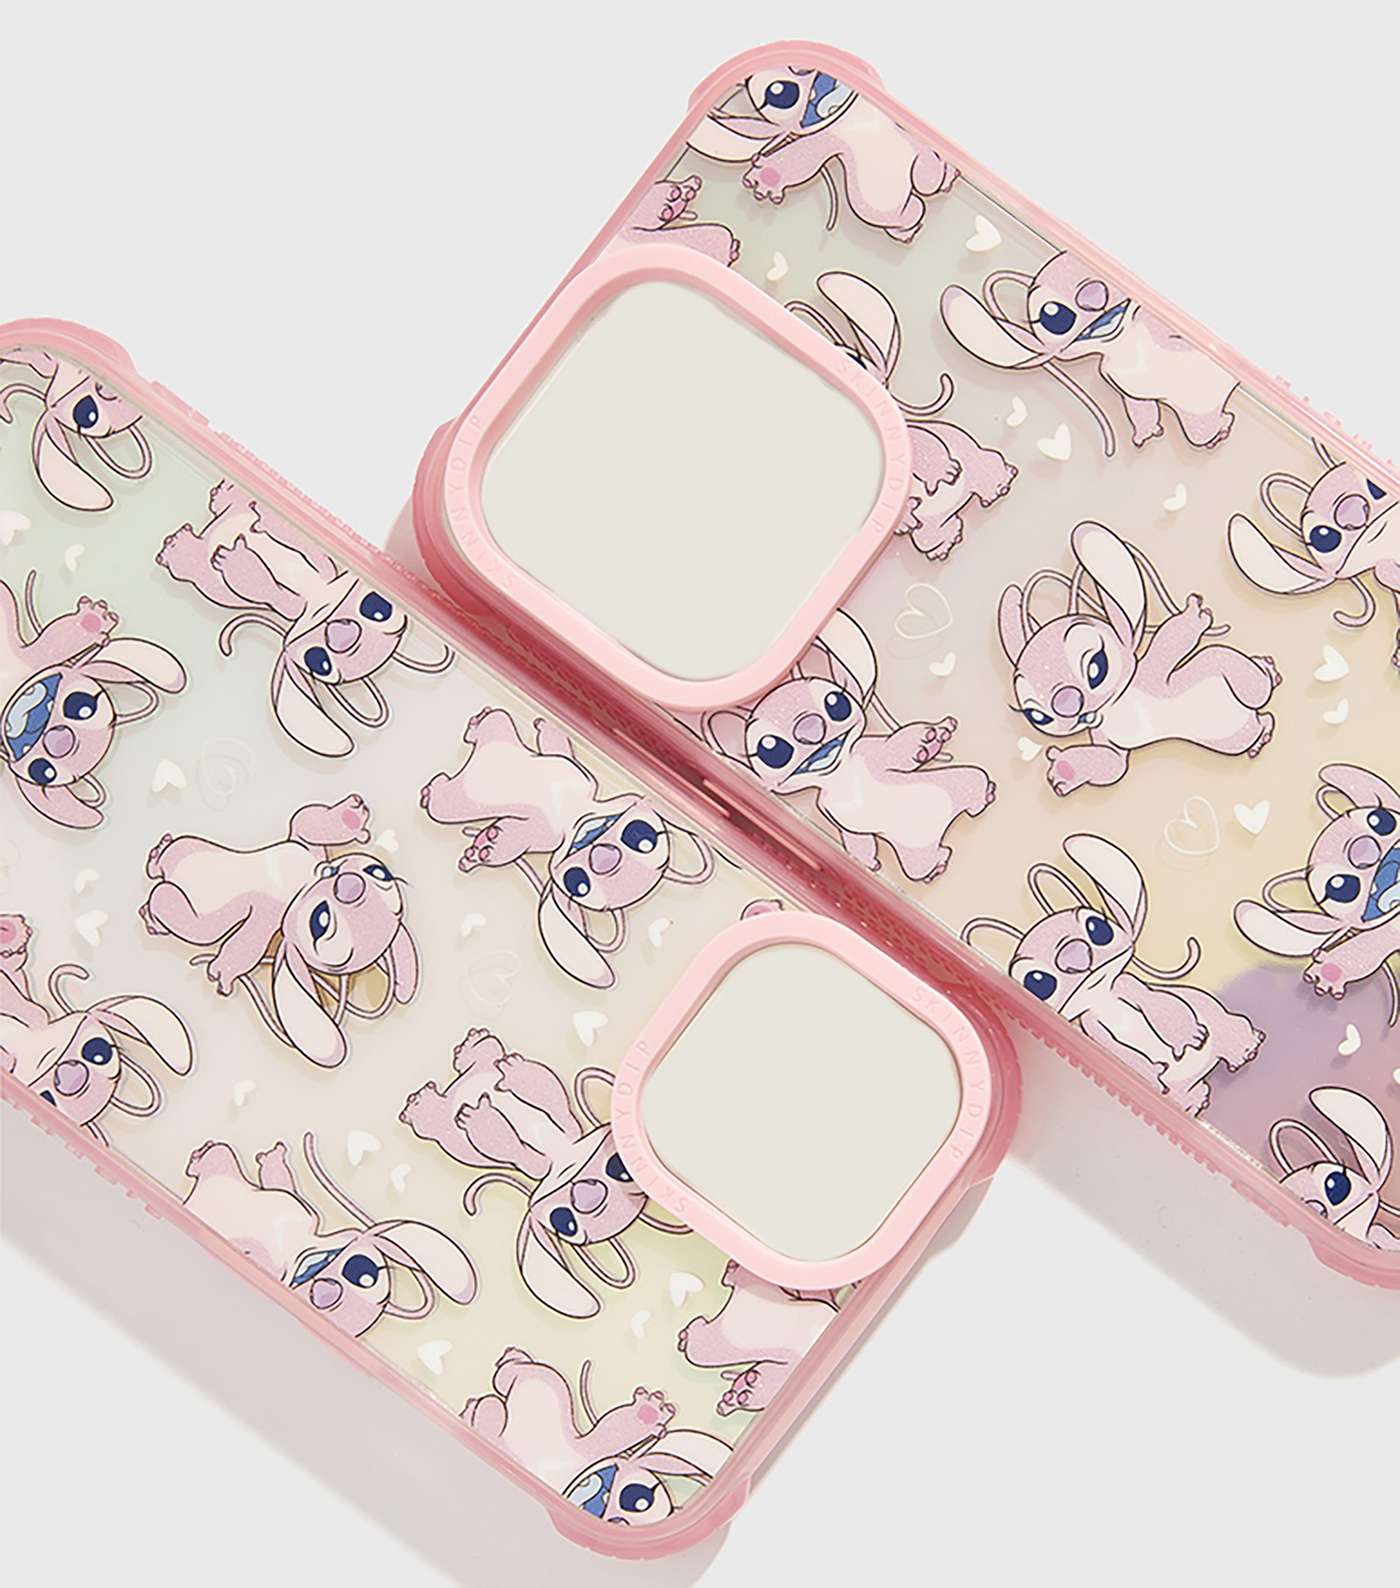 Skinnydip Bright Pink Disney Angel iPhone Shock Case Image 2